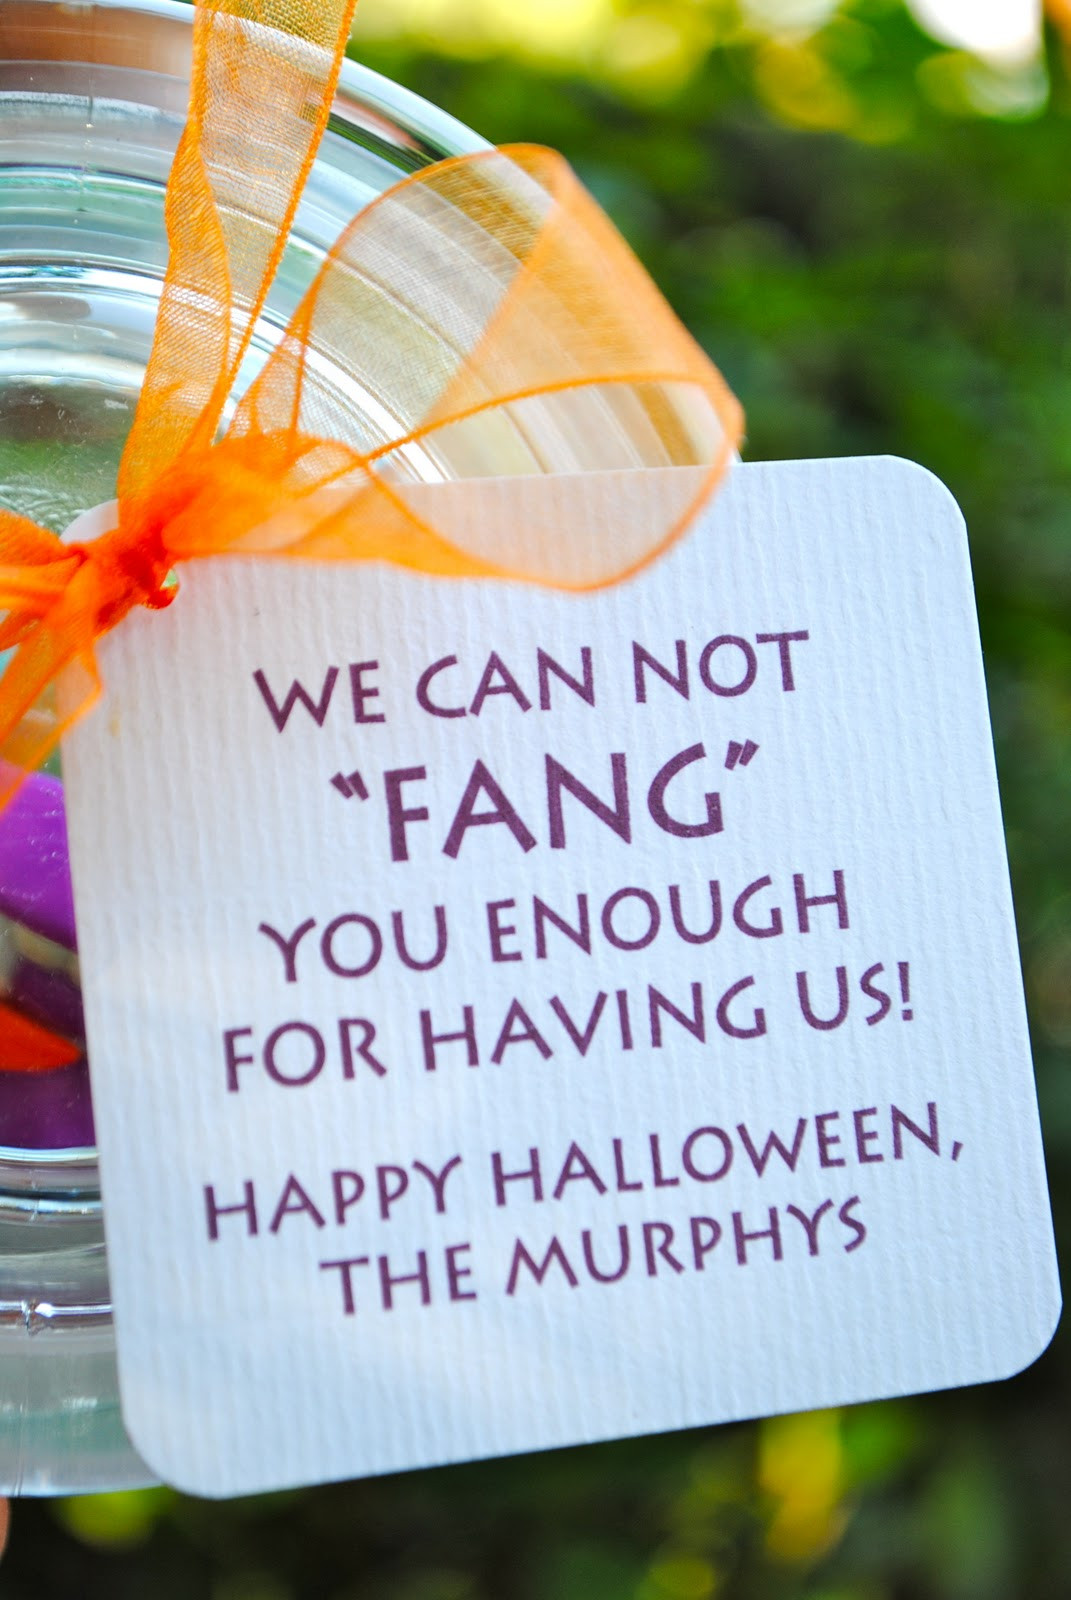 Halloween Party Hostess Gift Ideas
 Jac o lyn Murphy Smile minute Halloween Hostess Gifts